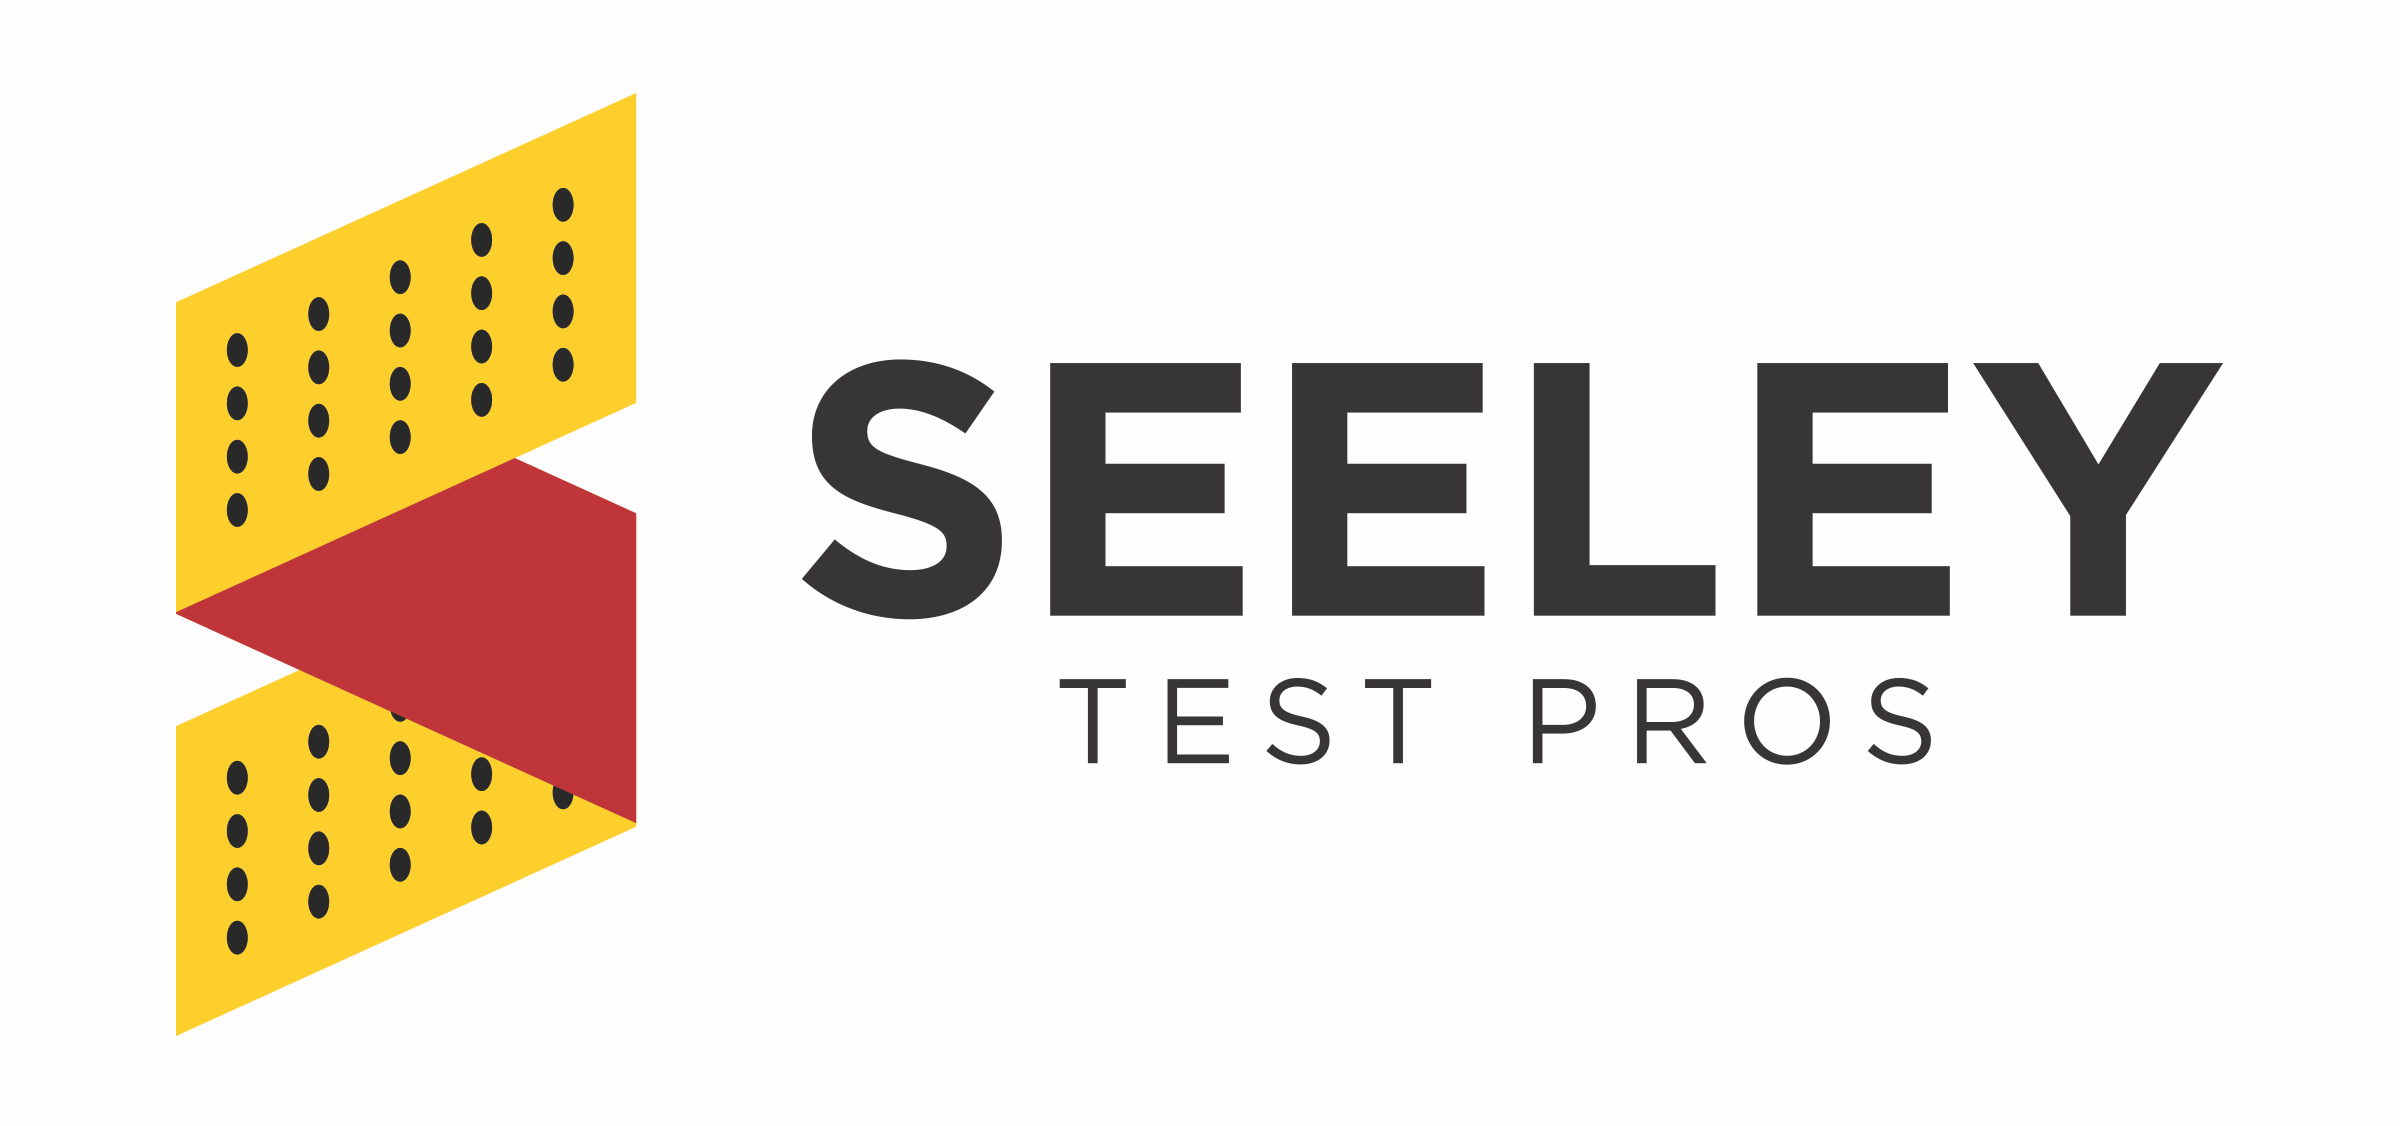 Seeley Test Pros logo